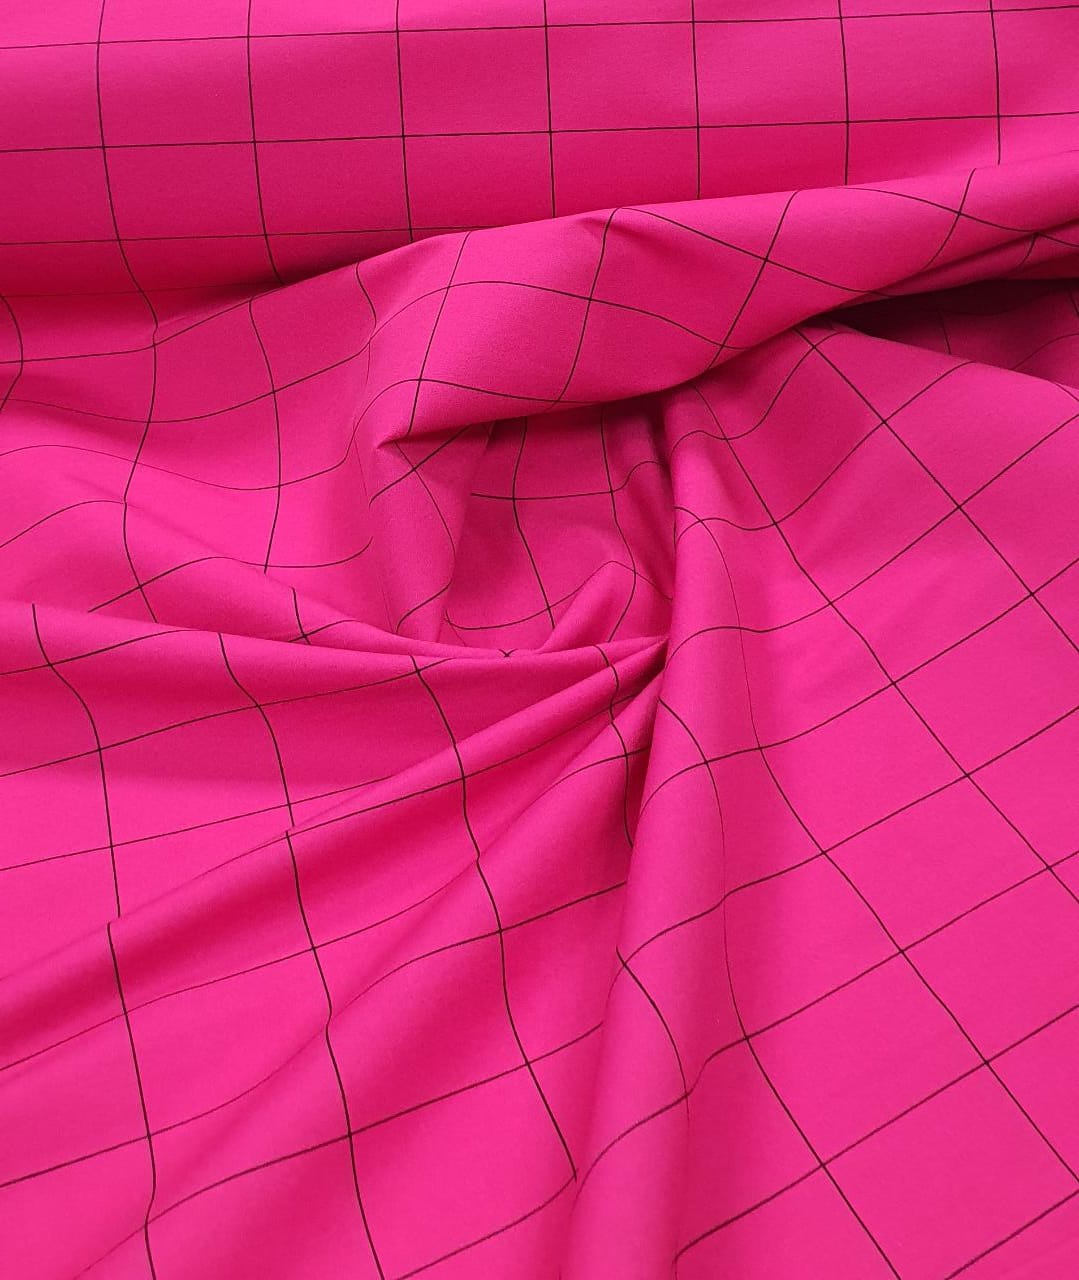 Bengaline Xadrez Grid Fundo Pink com Listras Preta 